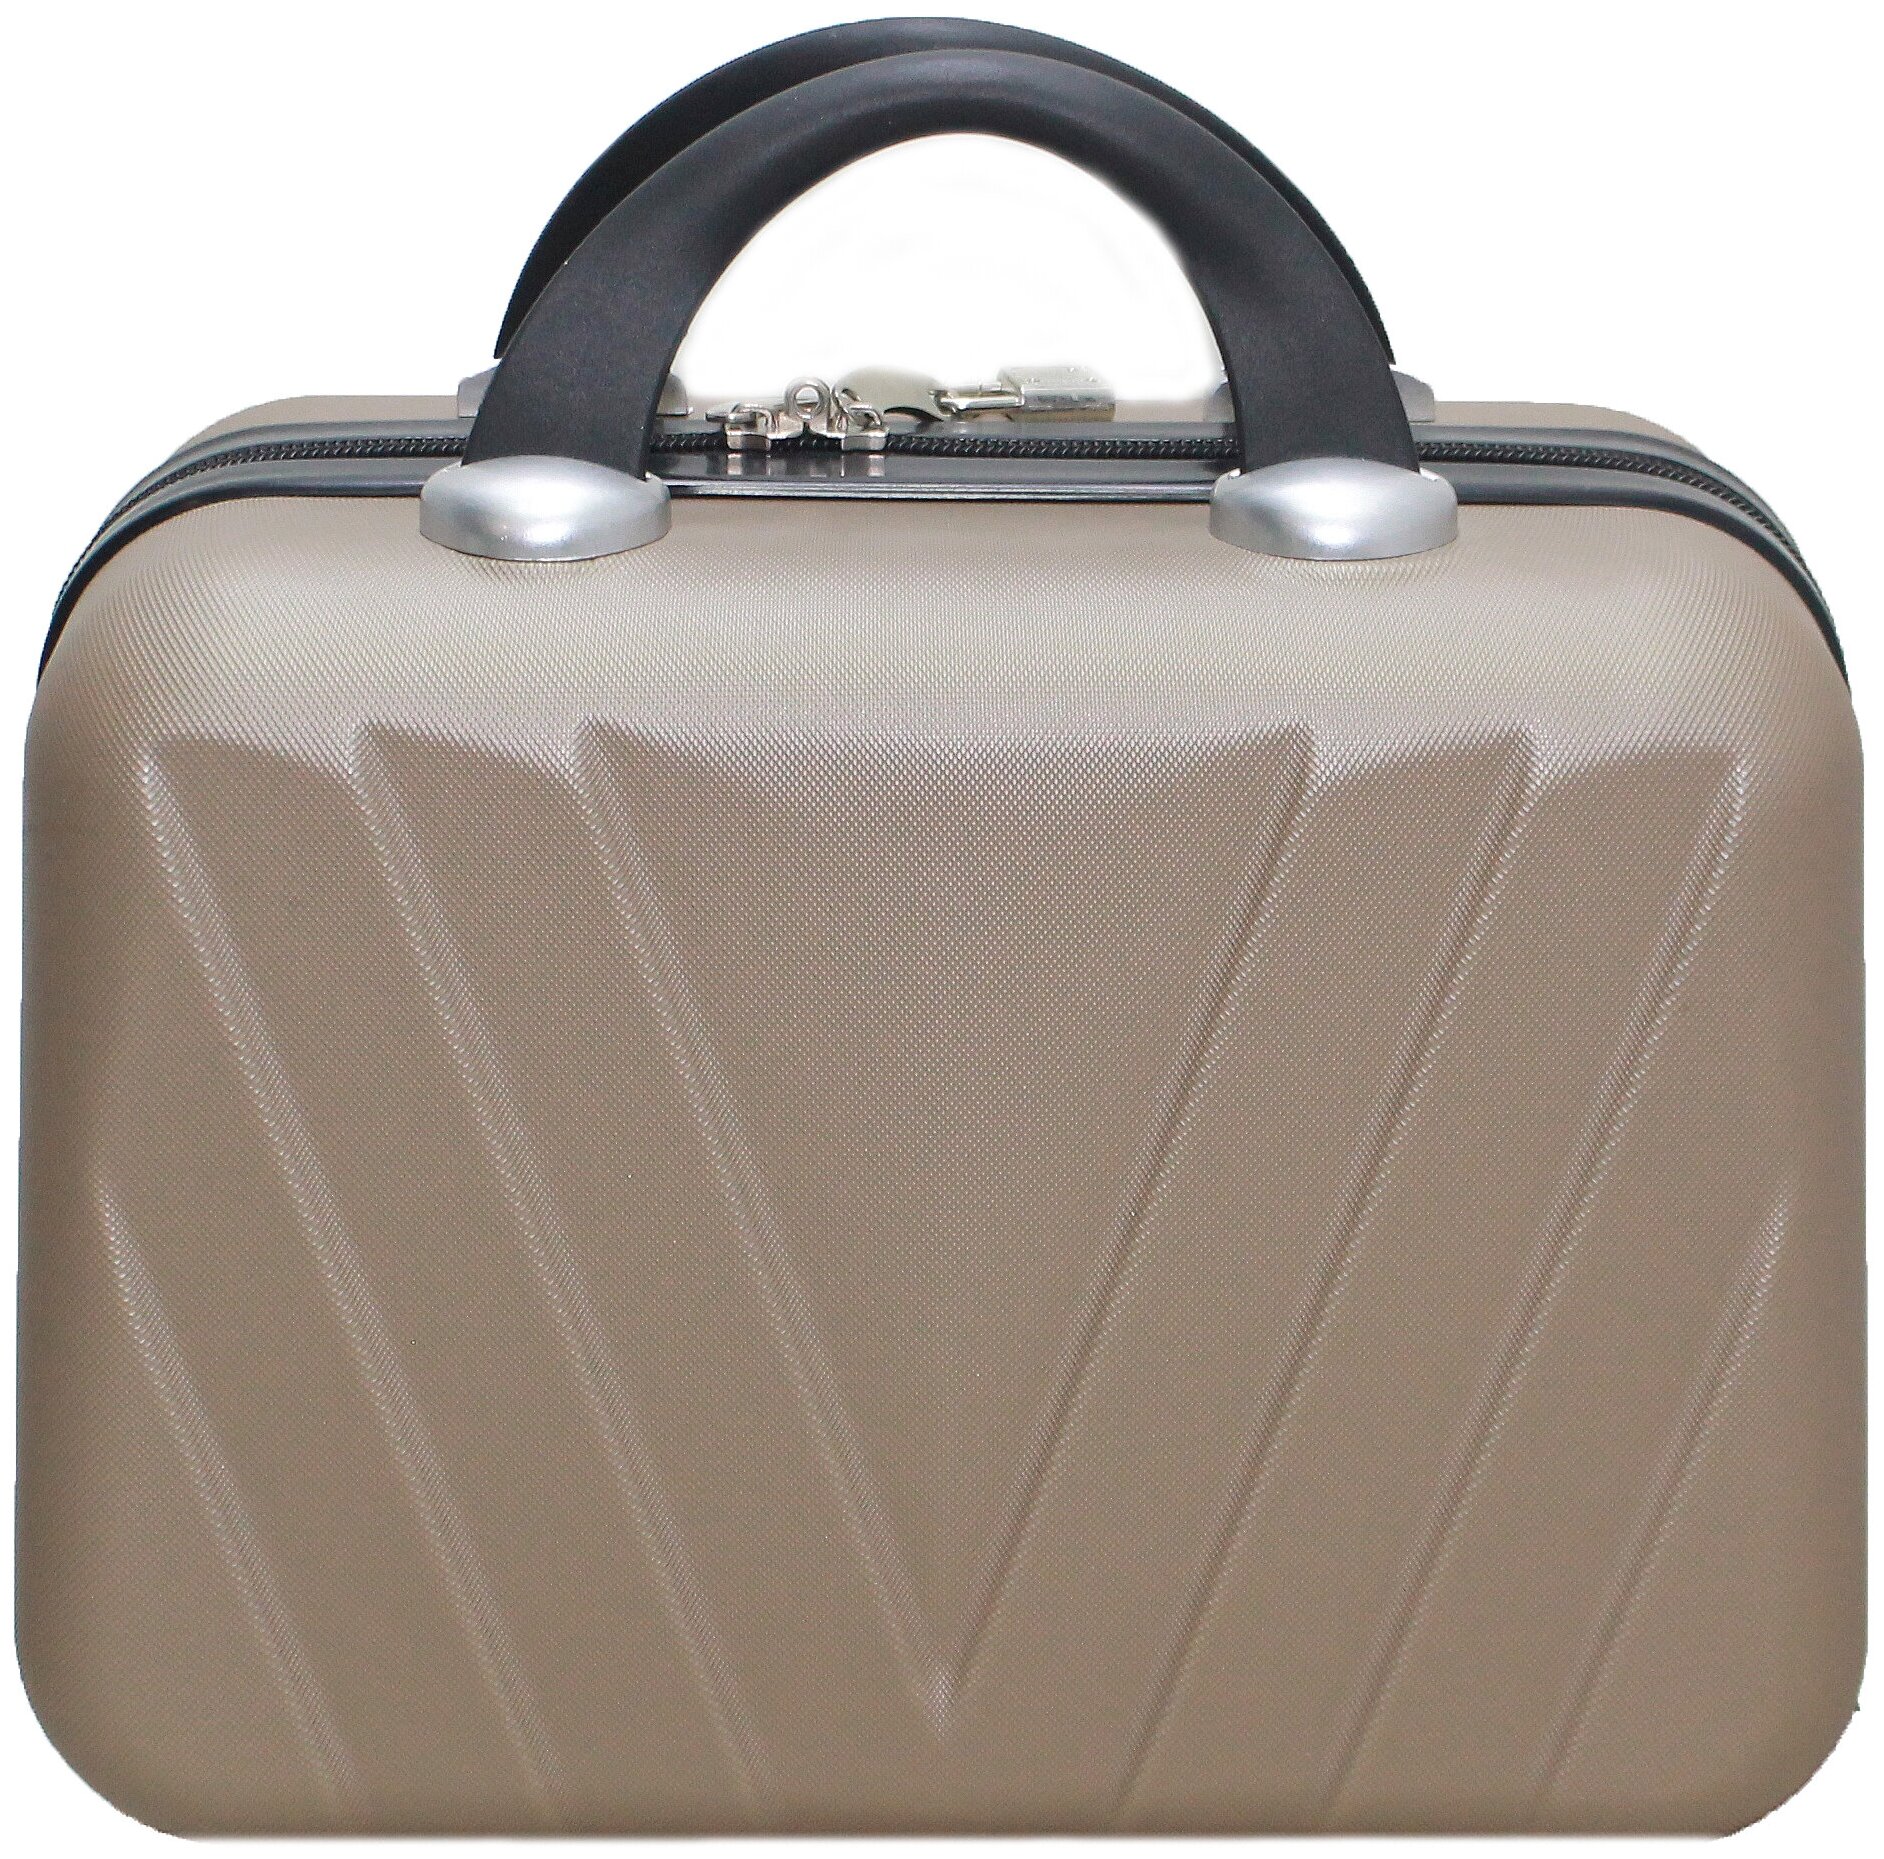 ручная кладь бьюти кейс сумка мини чемодан из ударопрочного ABS пластика вес 1 кг размер 33х29х18 цвет золотистый